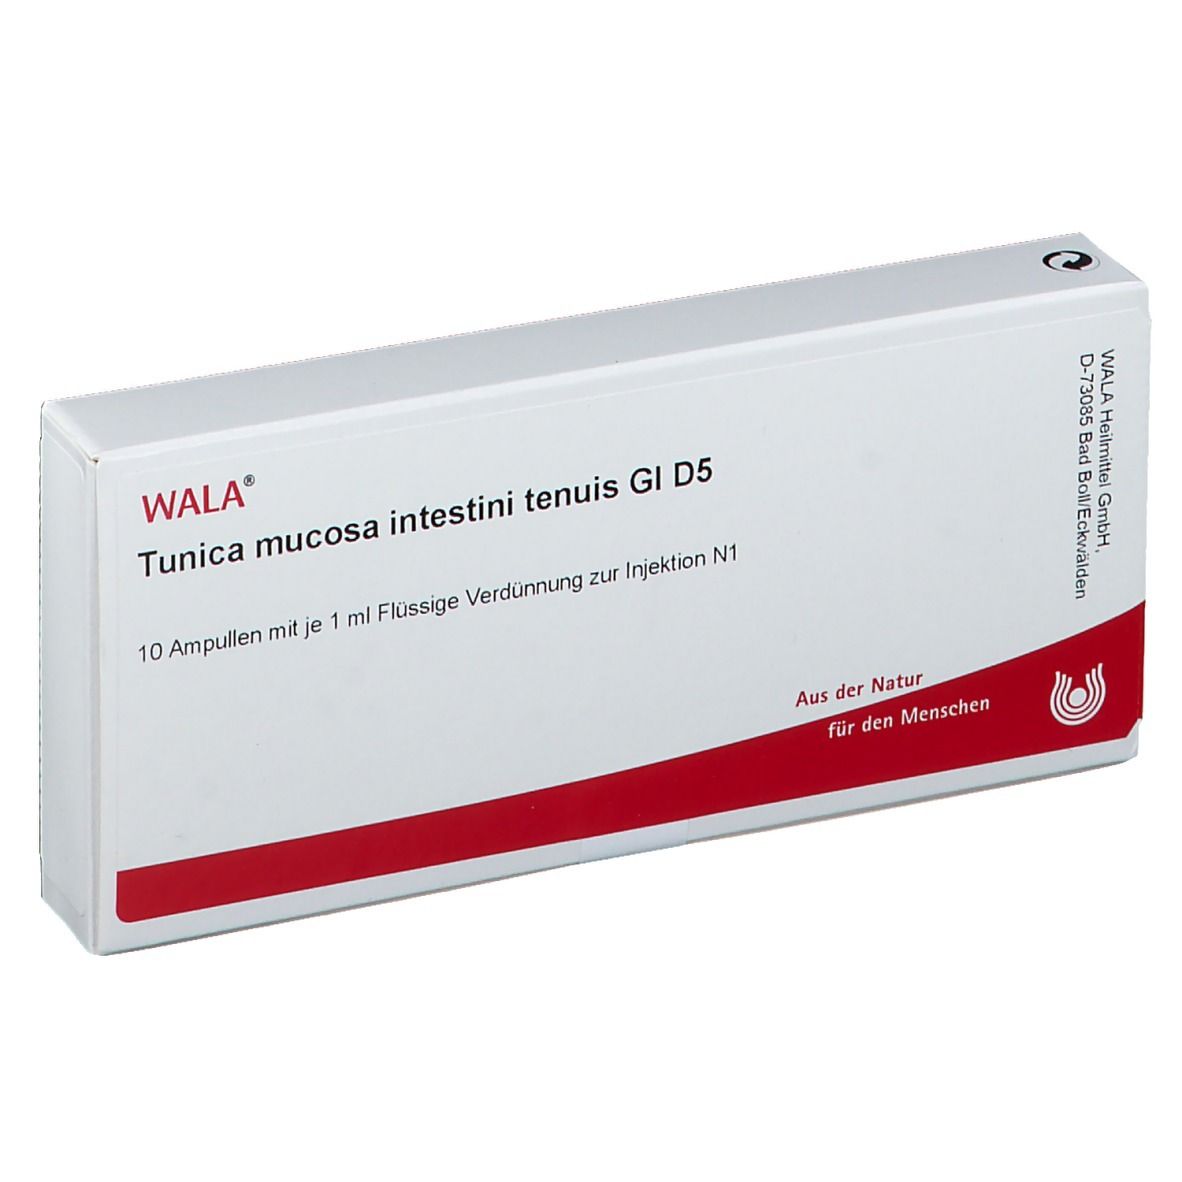 WALA® Tunica mucosa intestini tenuis Gl D 5